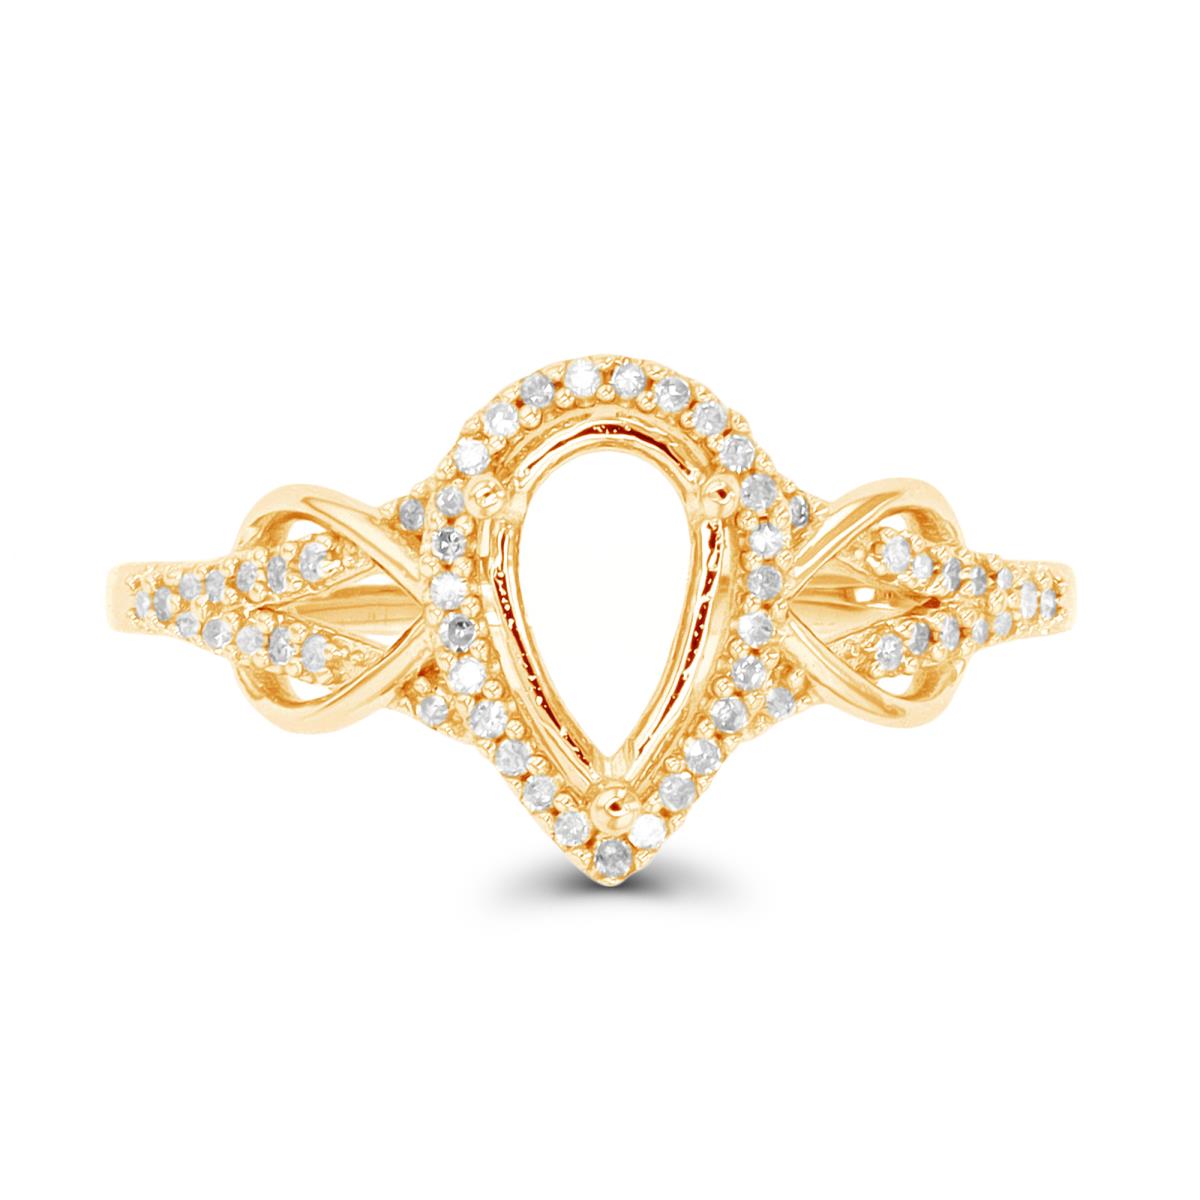 10K Yellow Gold 0.17CTTW Rnd Diamond Semi Mount Knot Sides Ring